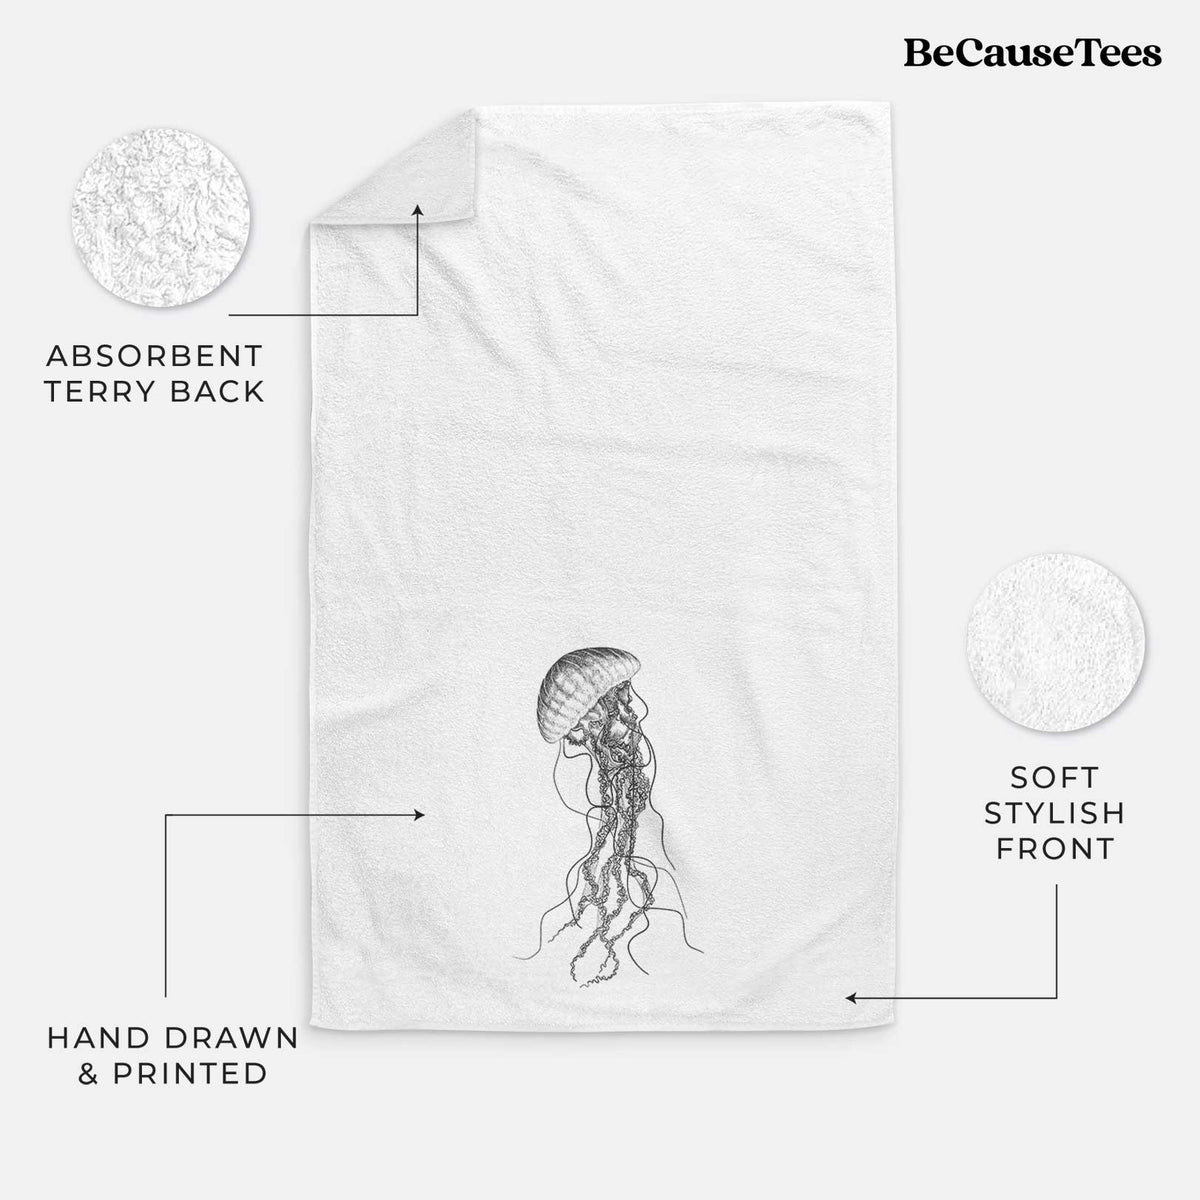 Black Sea Nettle Jellyfish - Chrysaora achlyos Hand Towel